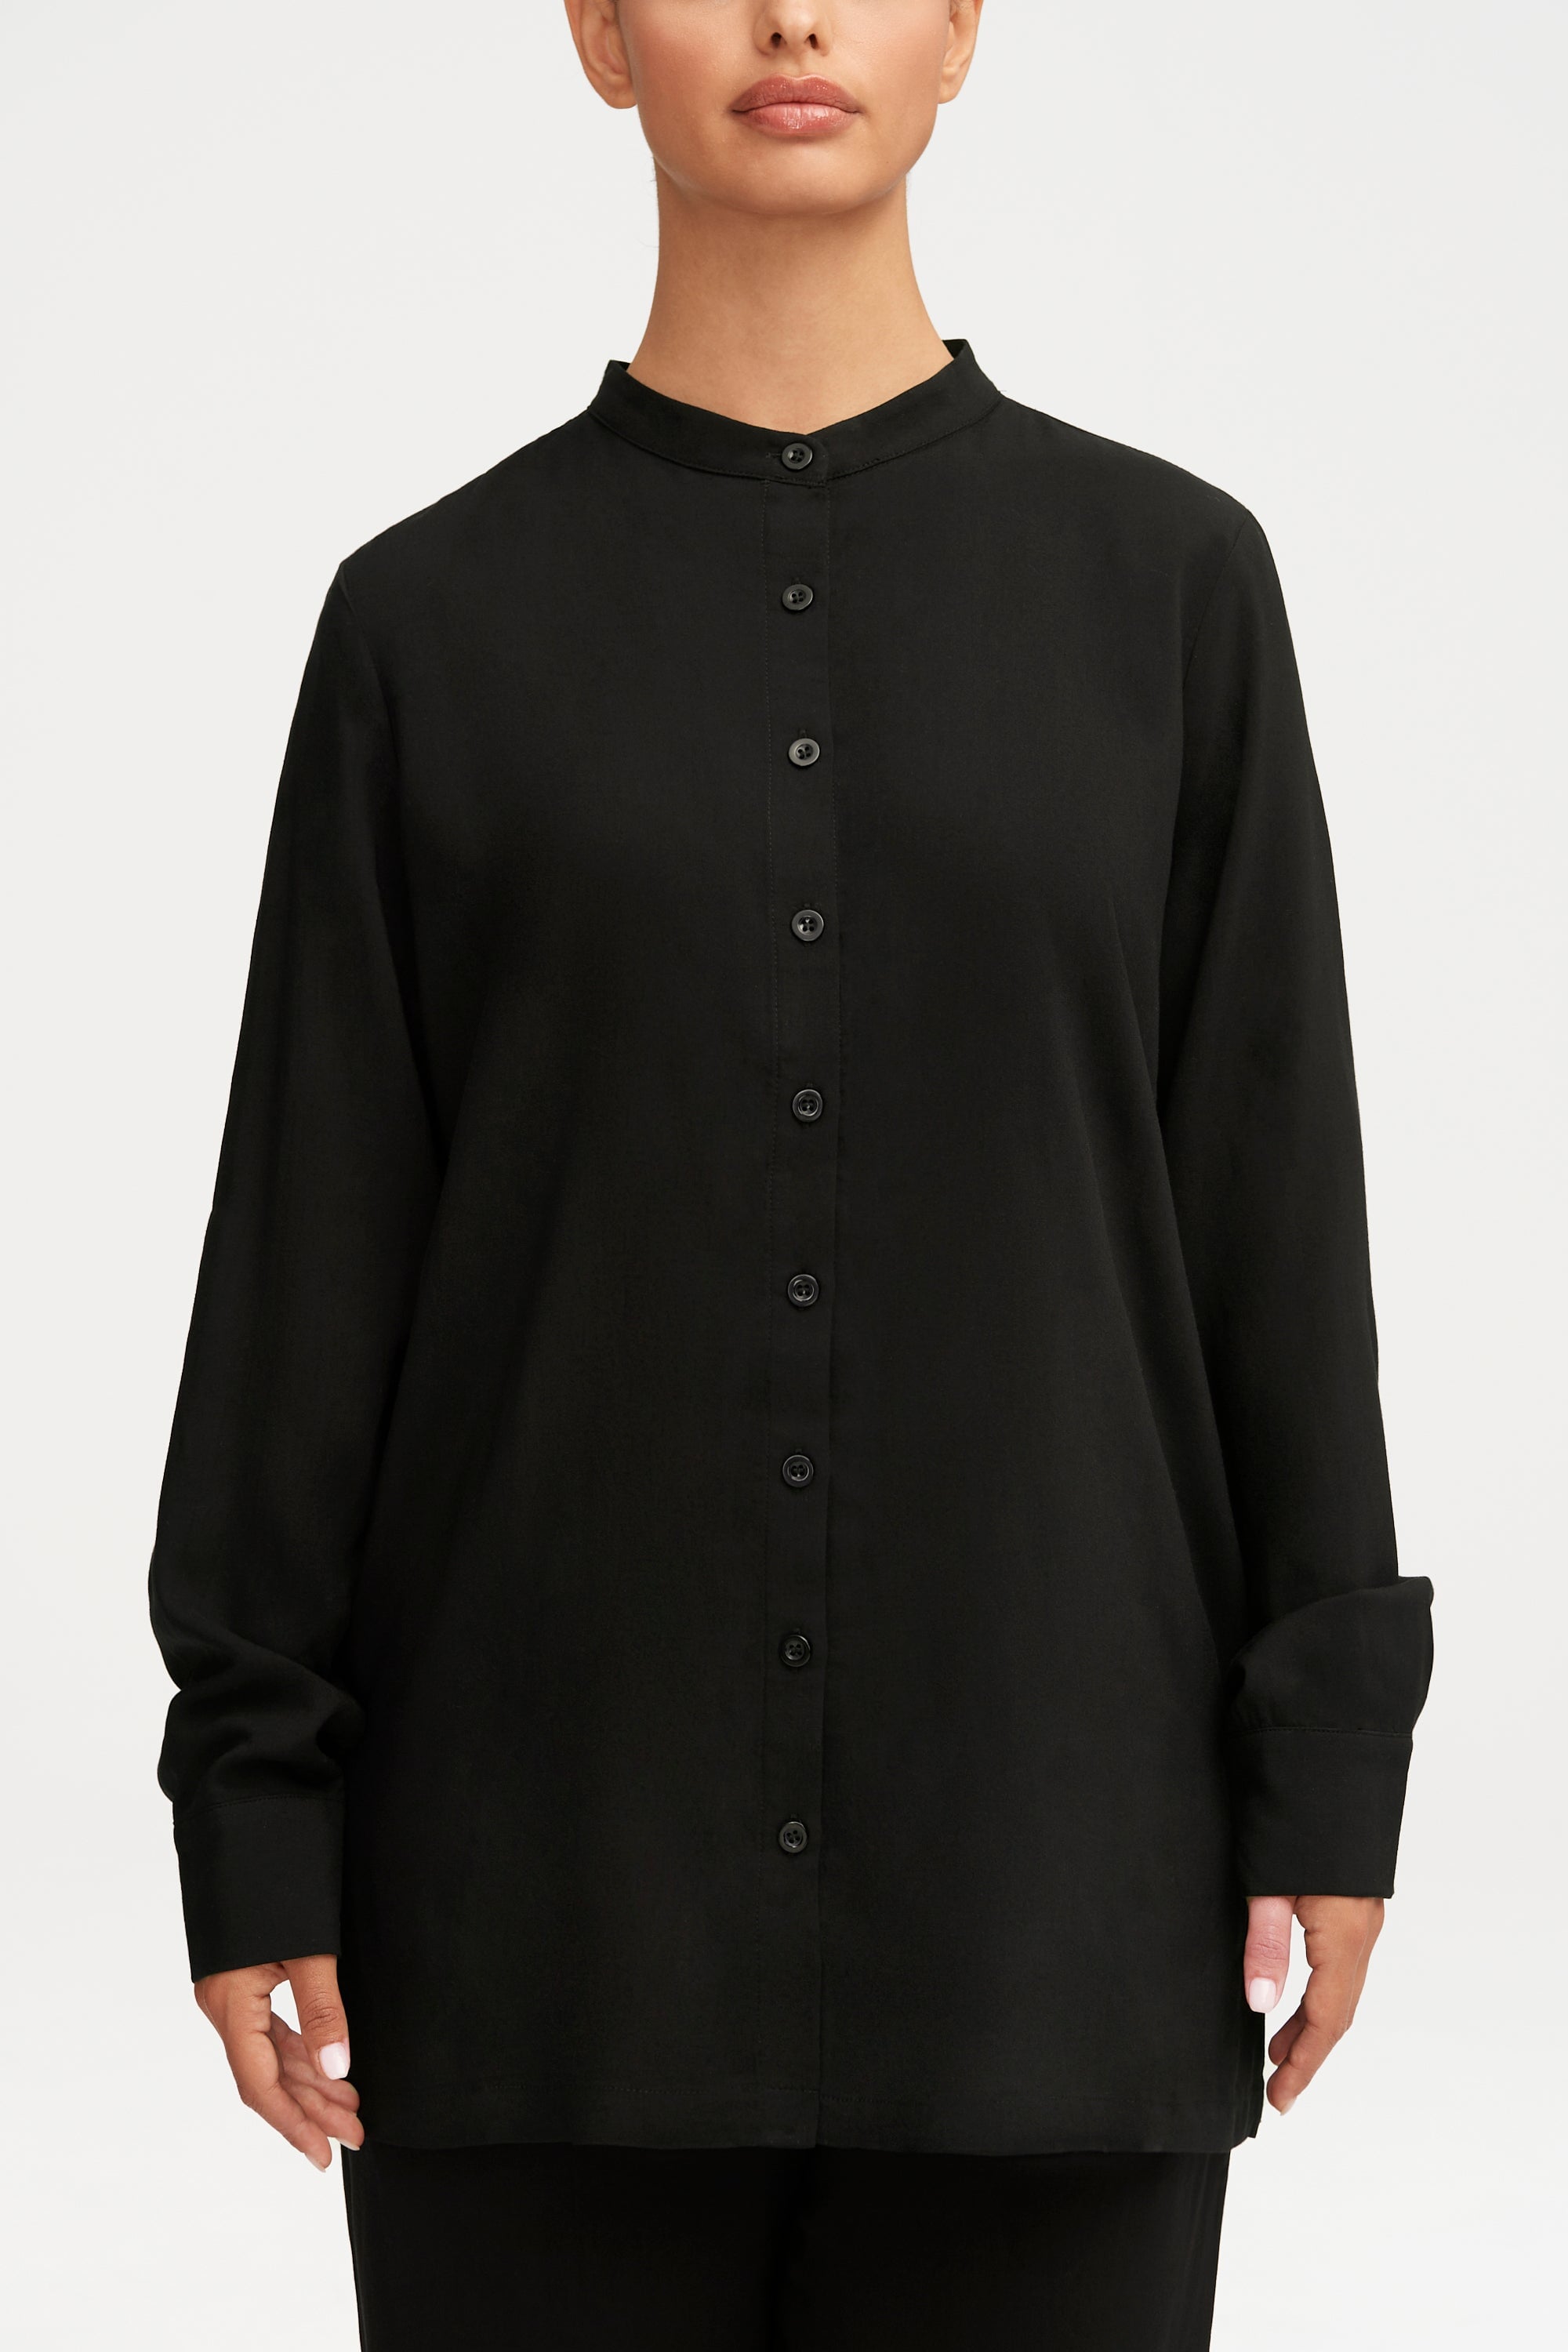 Alina Button Down Side Slit Top - Black Clothing epschoolboard 